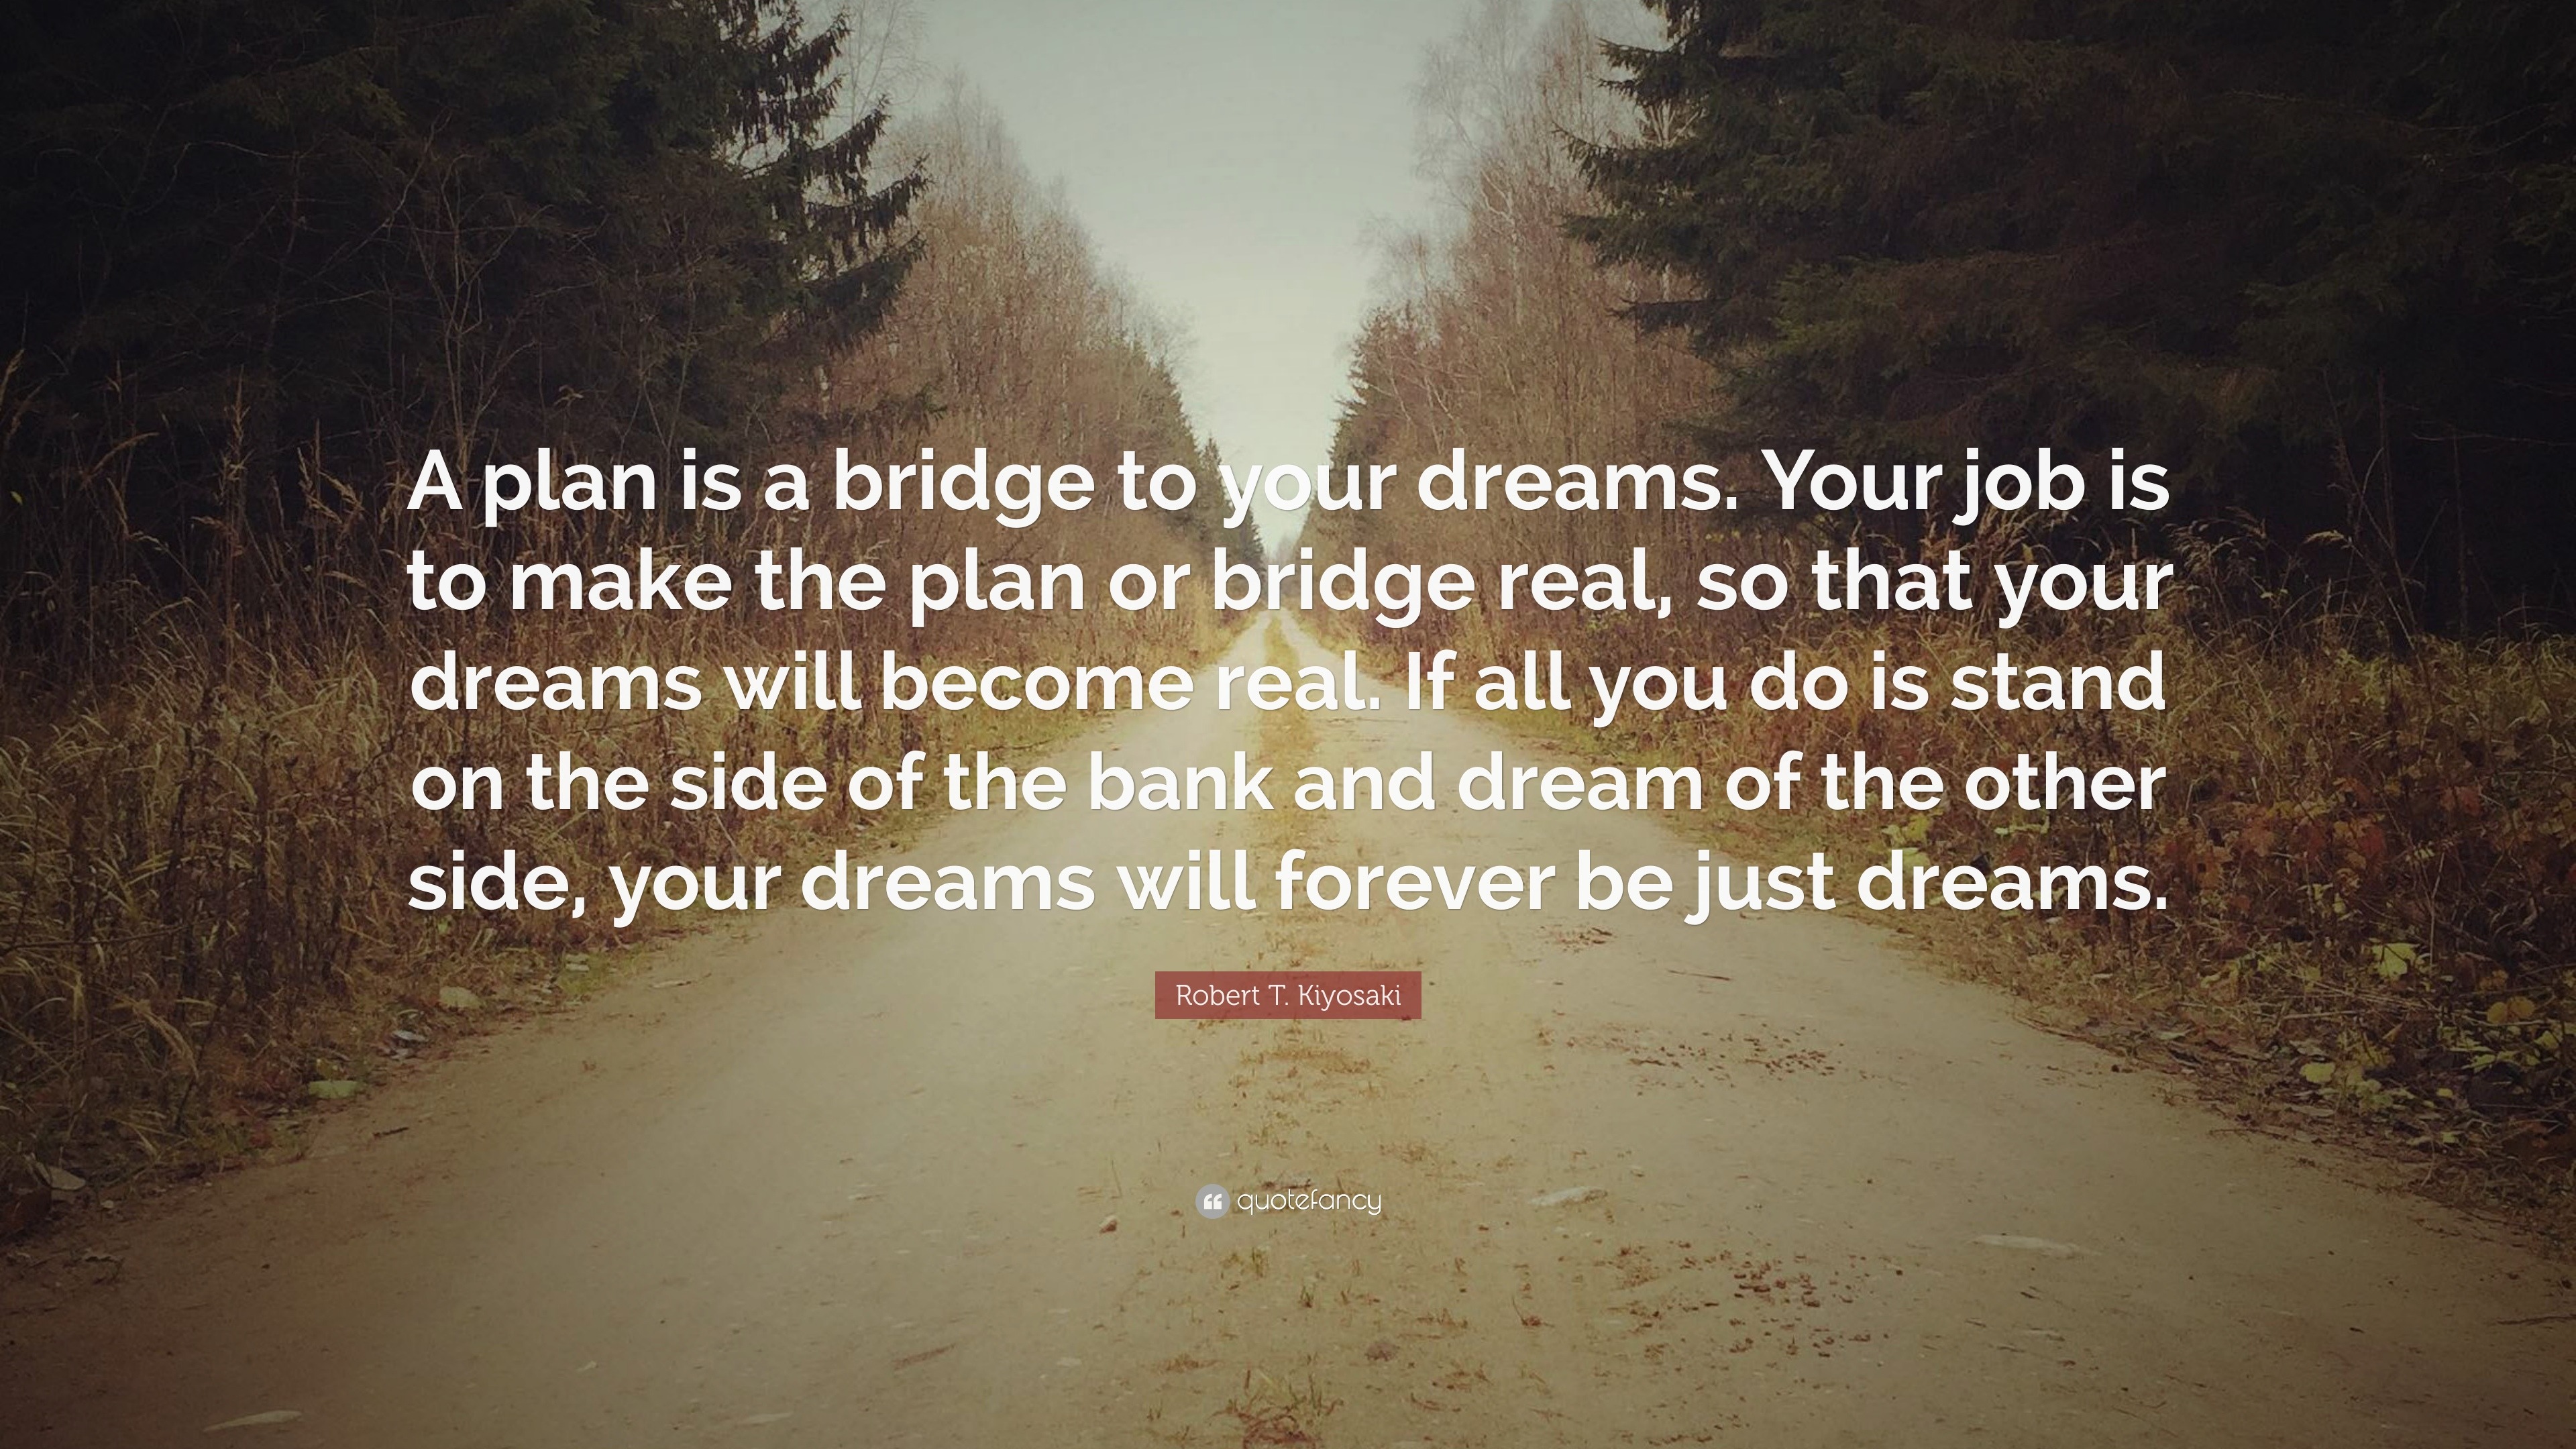 Robert T. Kiyosaki Quote “A plan is a bridge to your